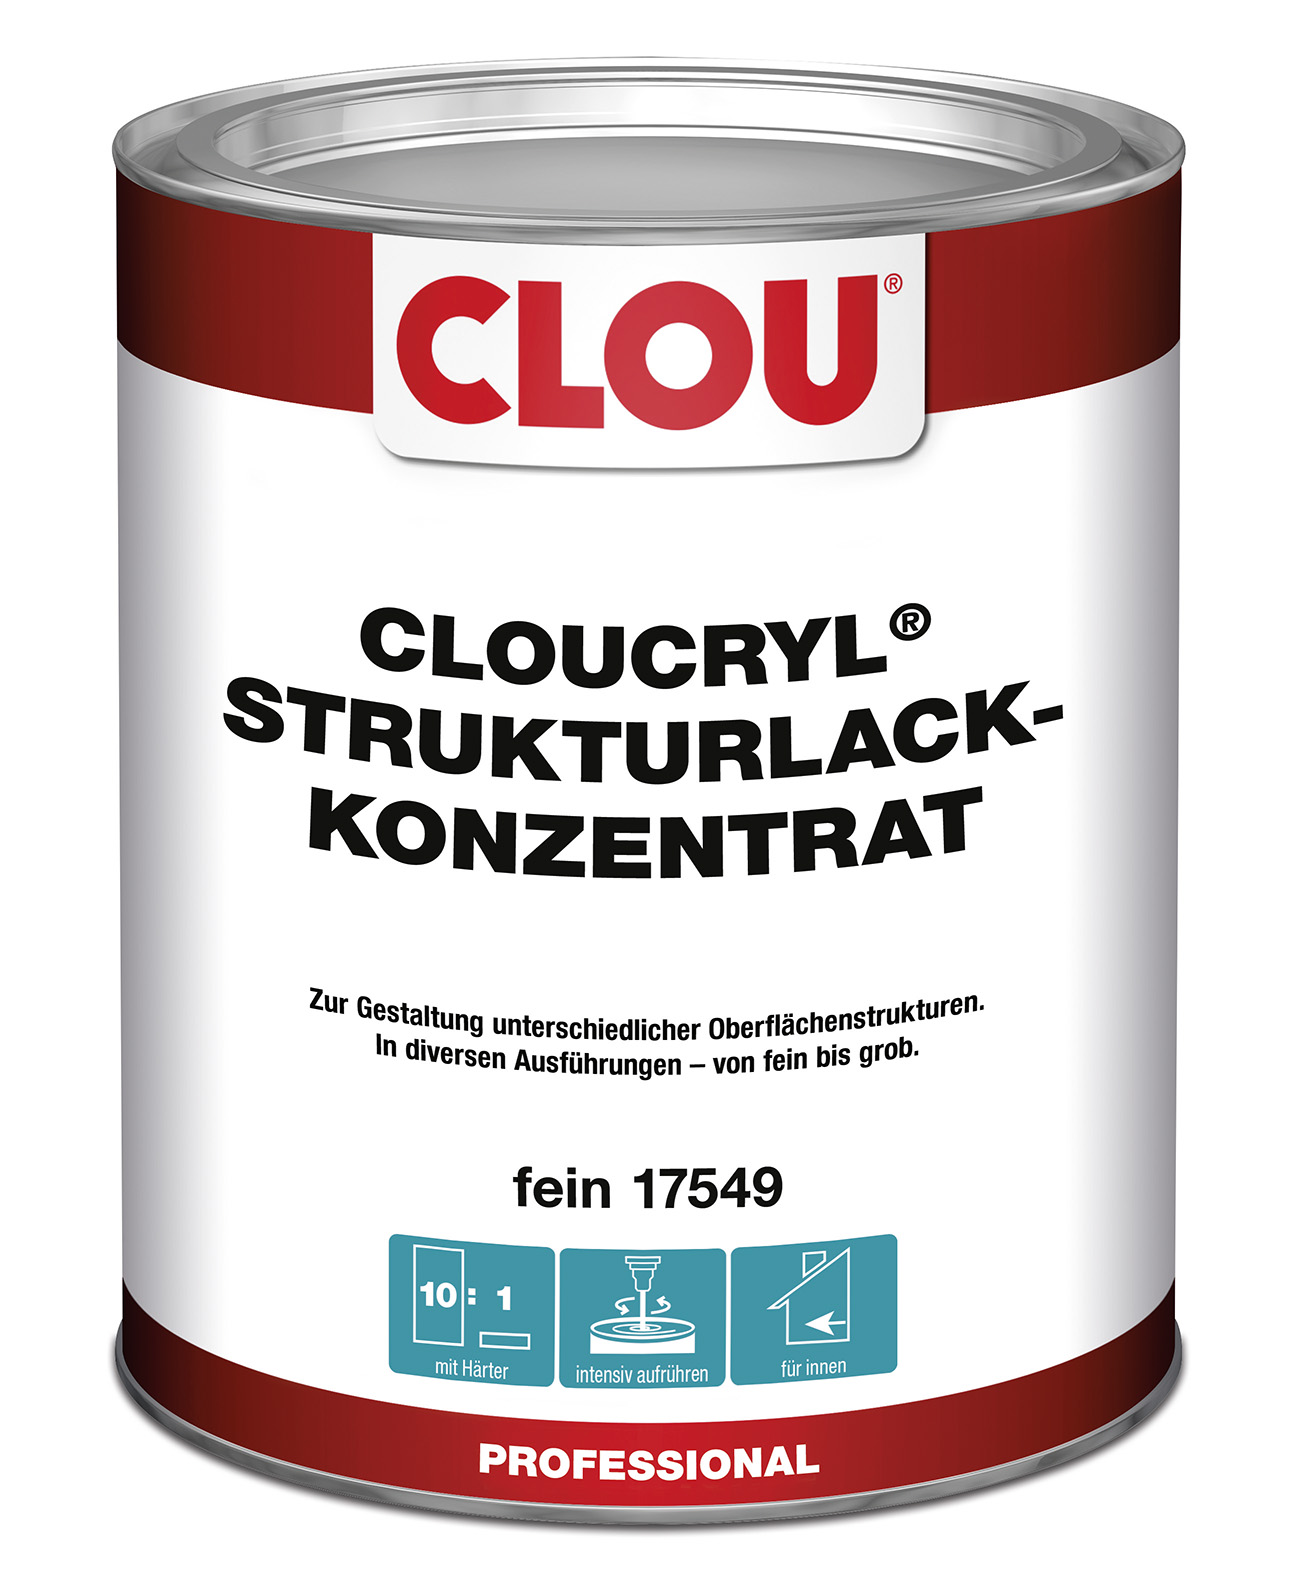 CLOUCRYL Strukturlack-Konzentrat